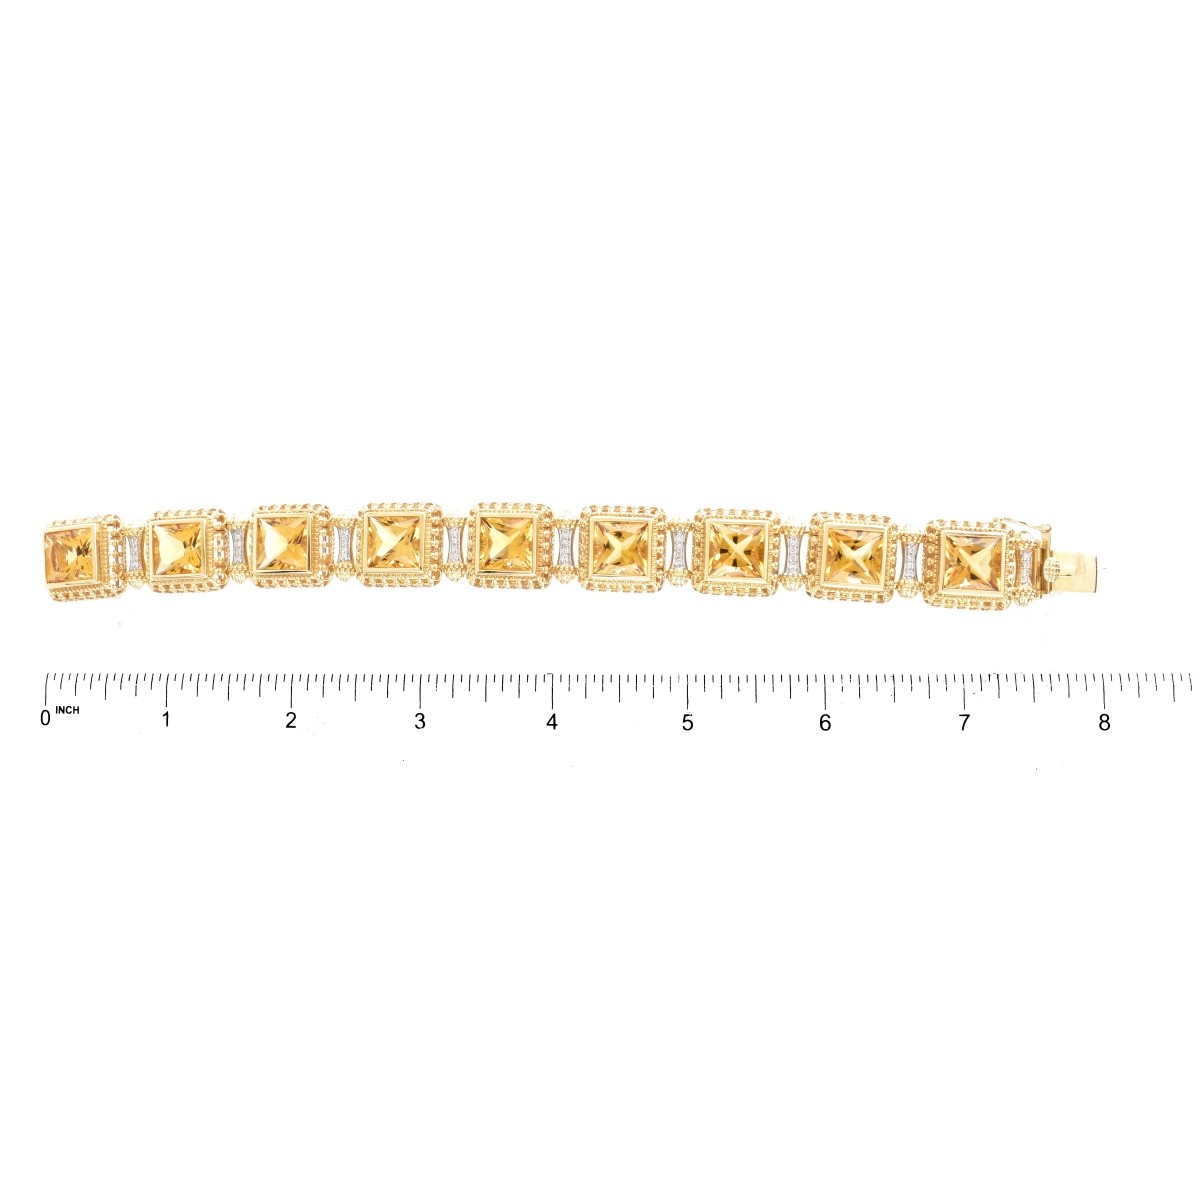 Citrine, Diamond and 14 Karat Yellow Gold Bracelet